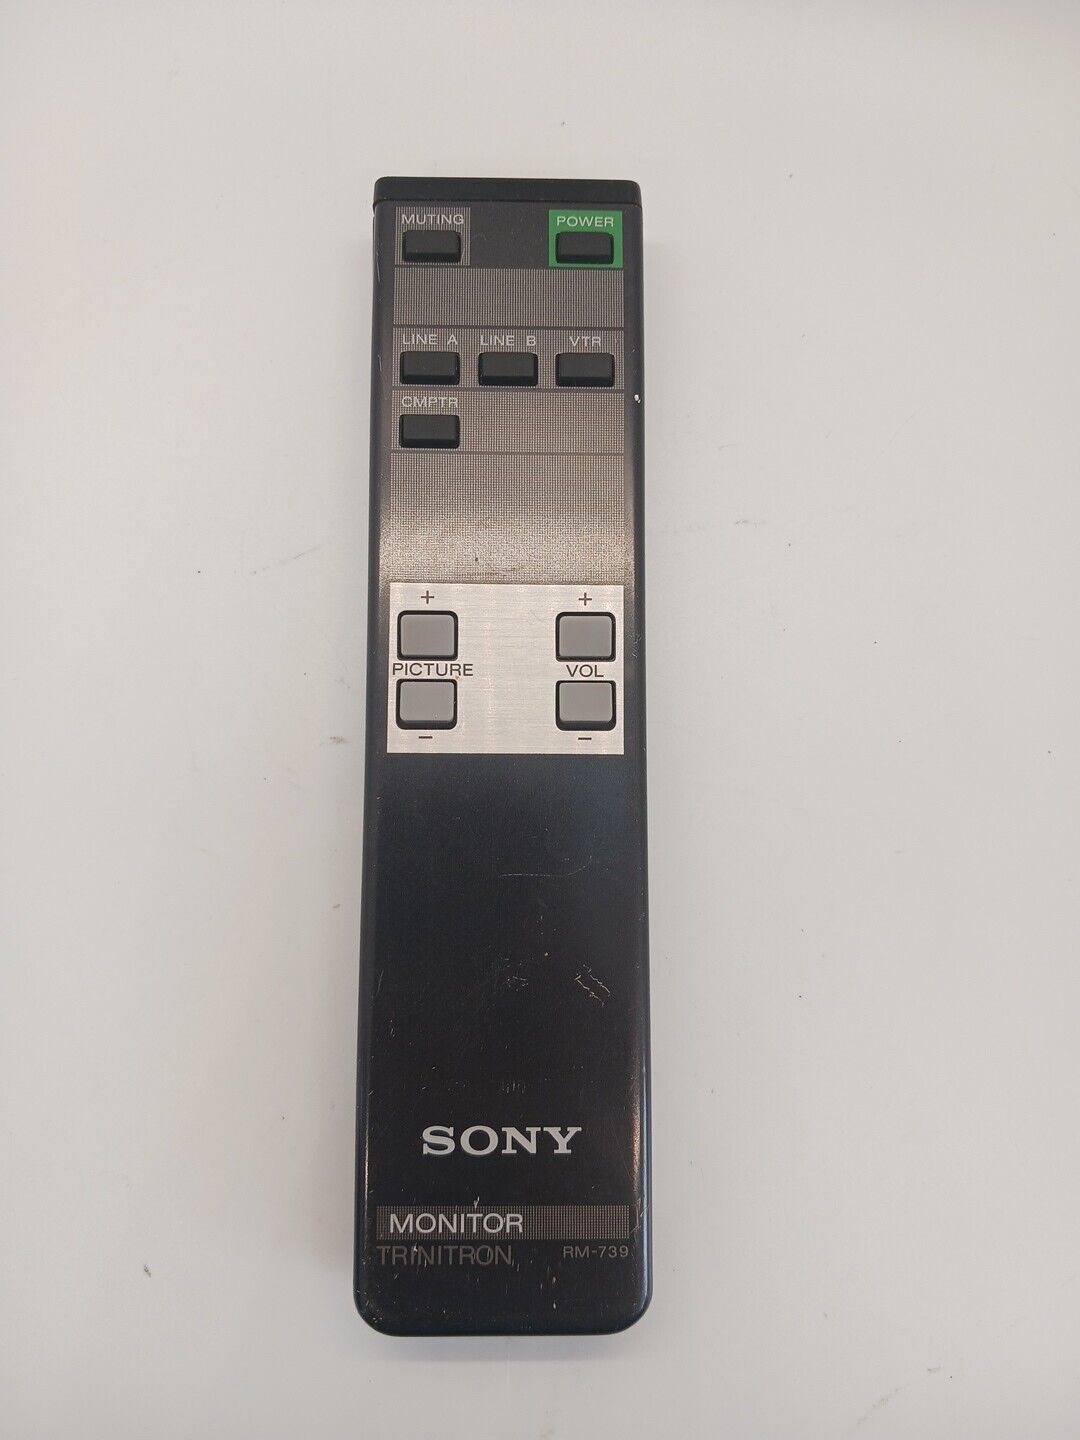 Sony RM-739 Trinitron Monitor Remote Control for PVM-2030 & PVM-2530 